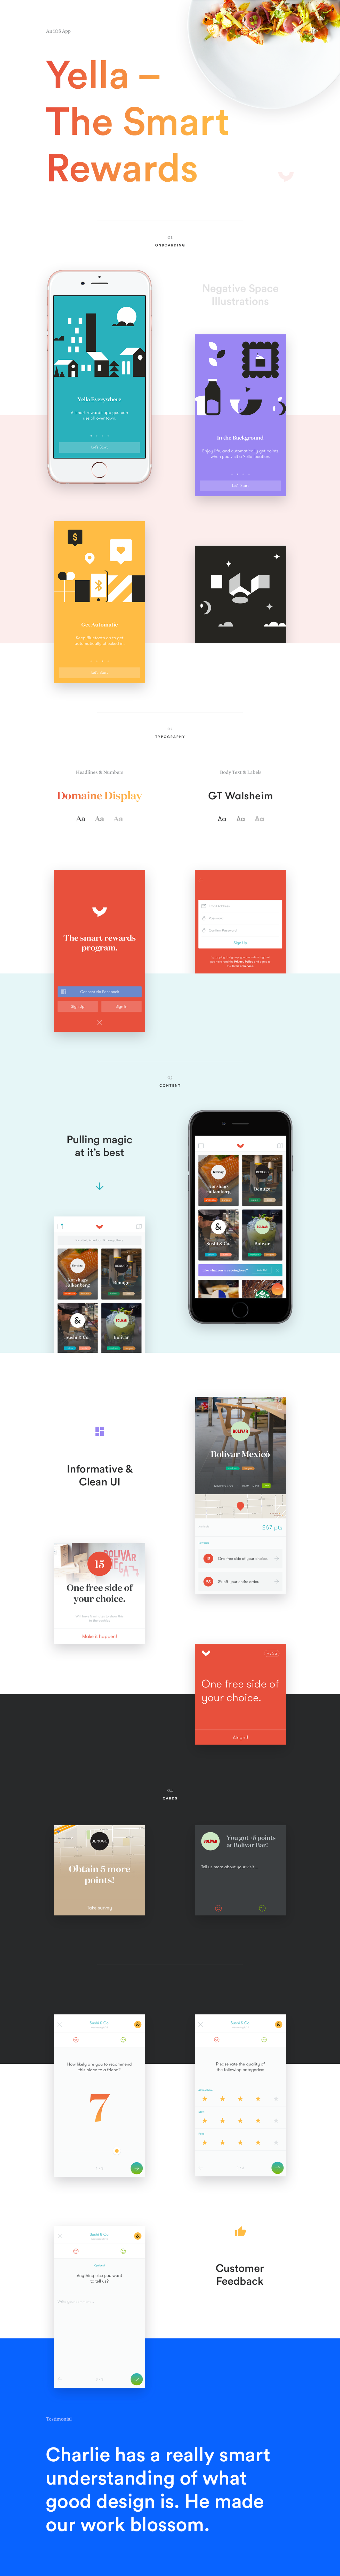 ios app design iphone colorful yella chicago rewards Program Smart ux UI Onboarding facebook